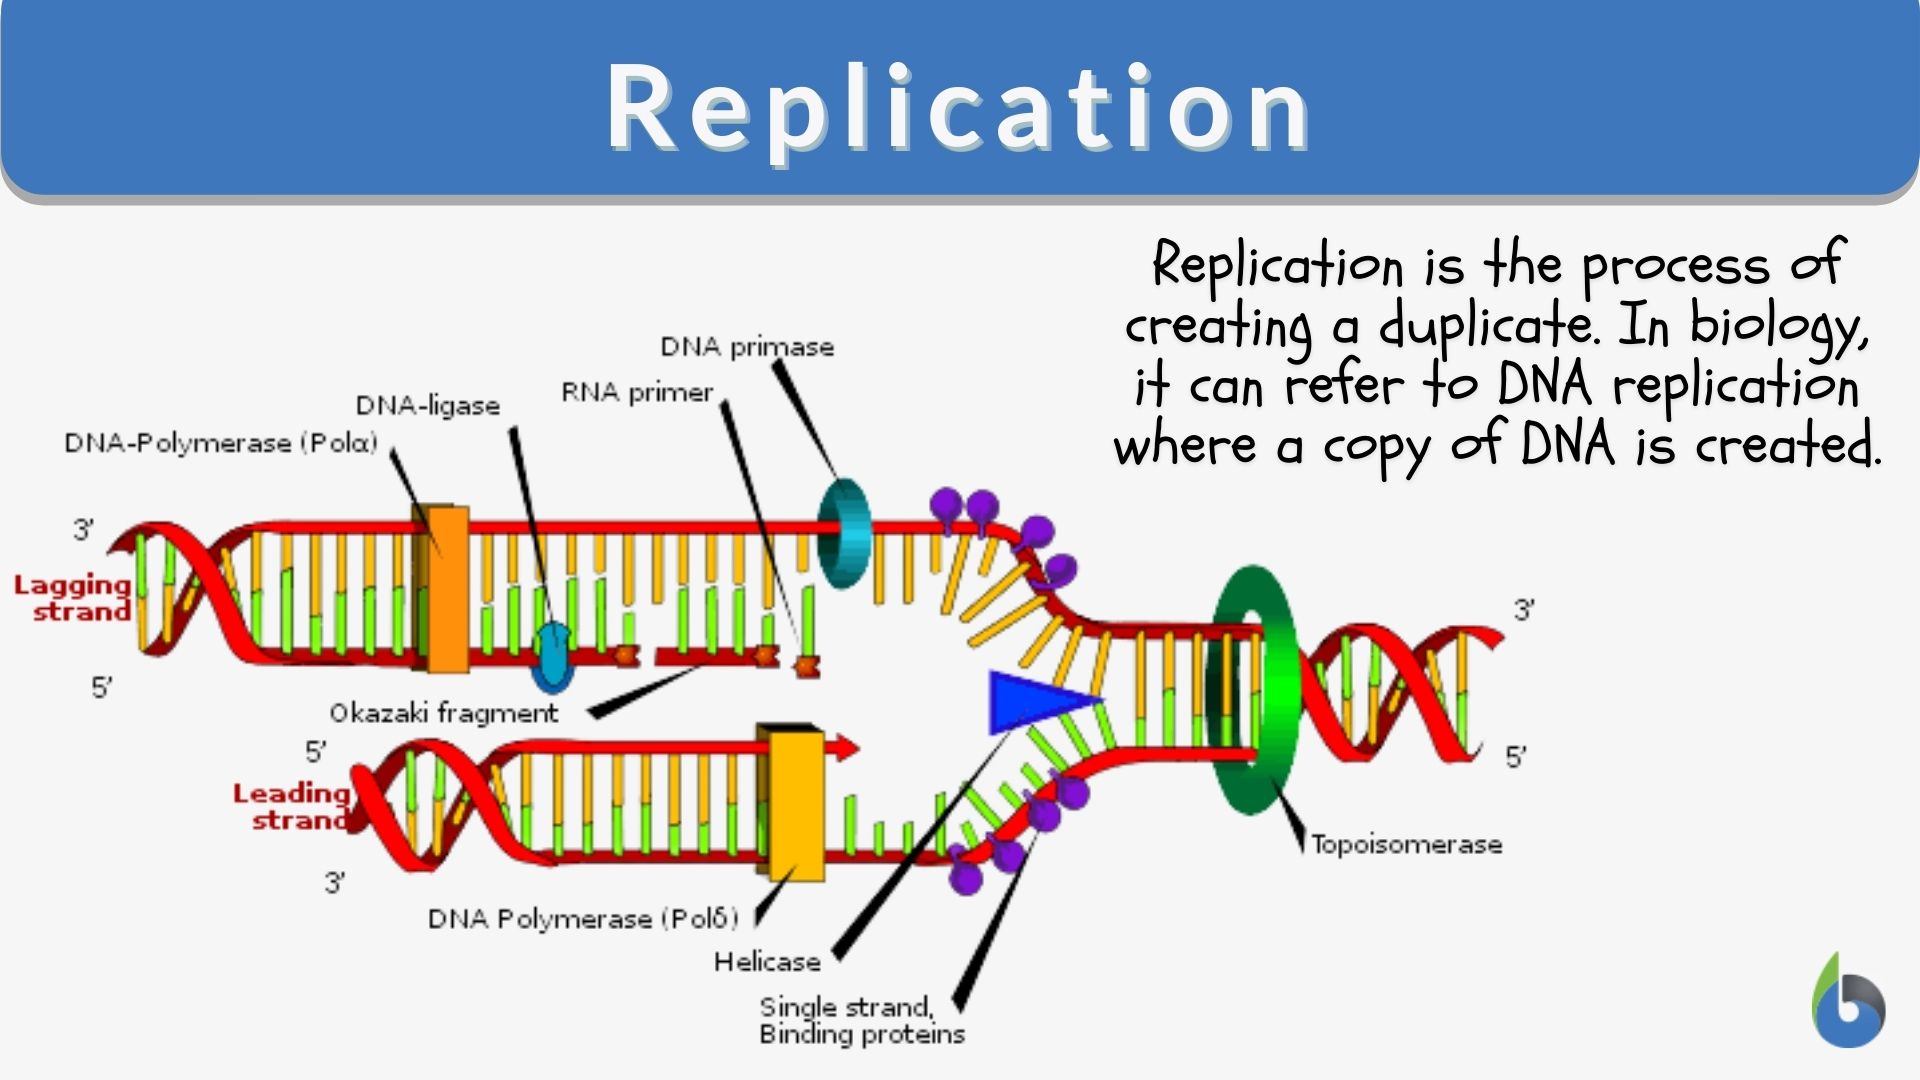 dna replication model